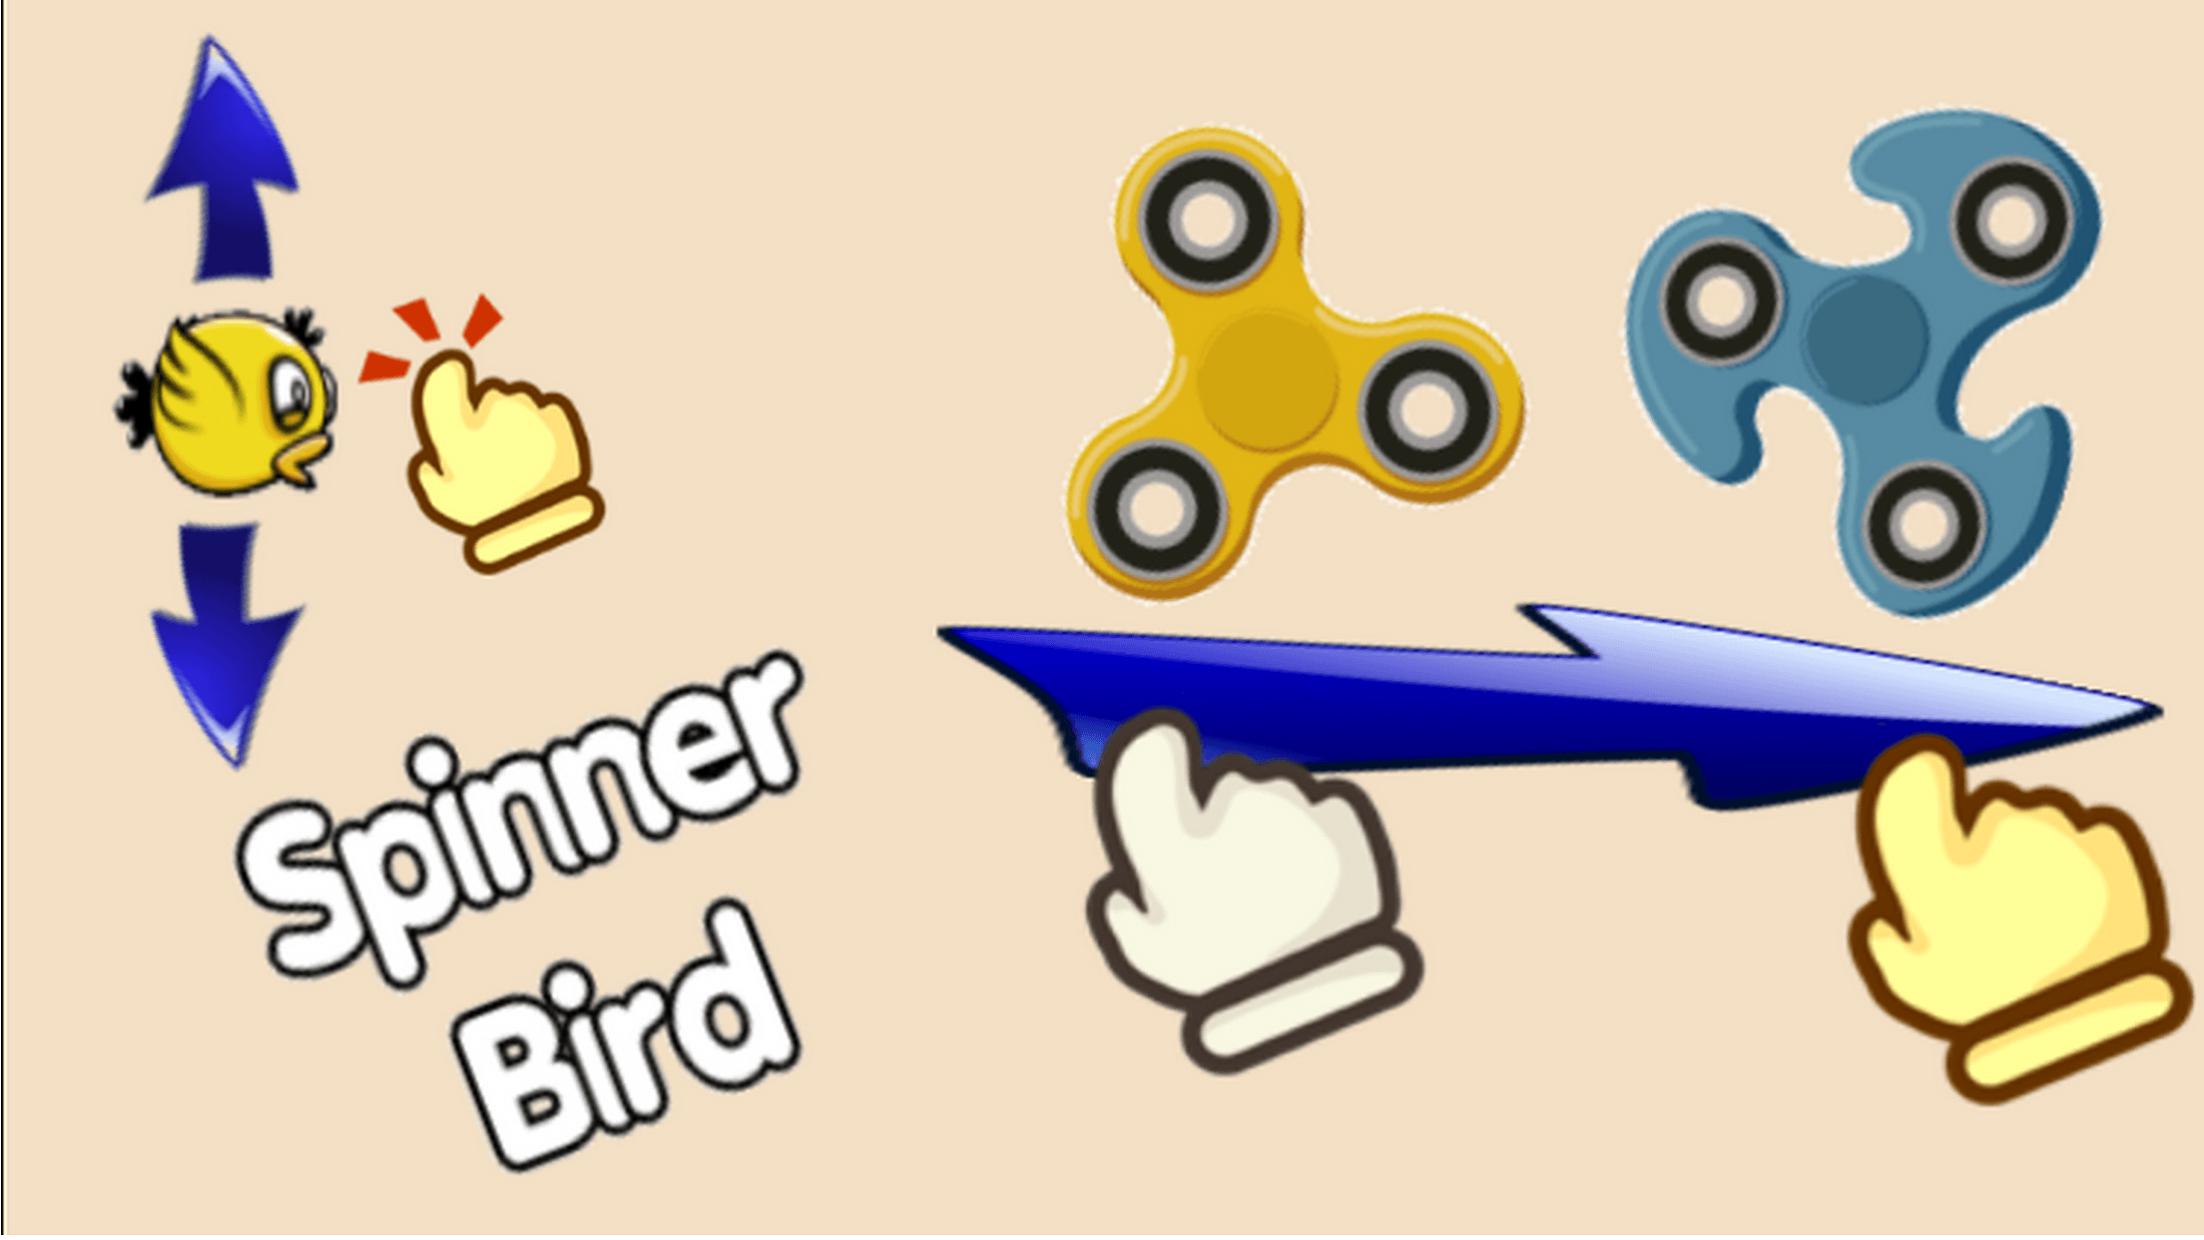 SpinnerBird